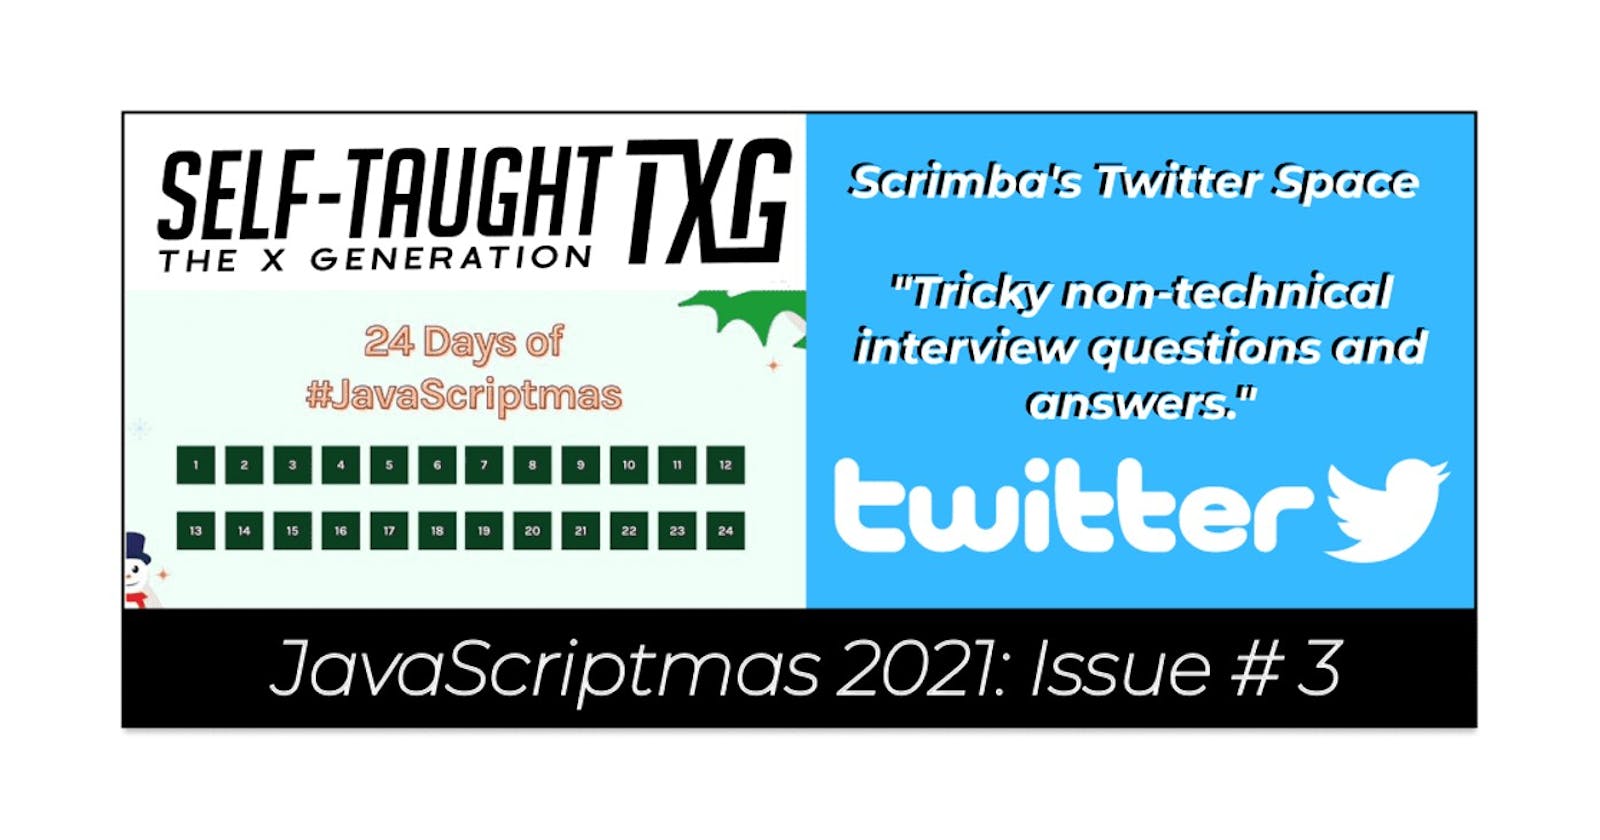 Scrimba: JavaScriptmas 2021 - Issue 3